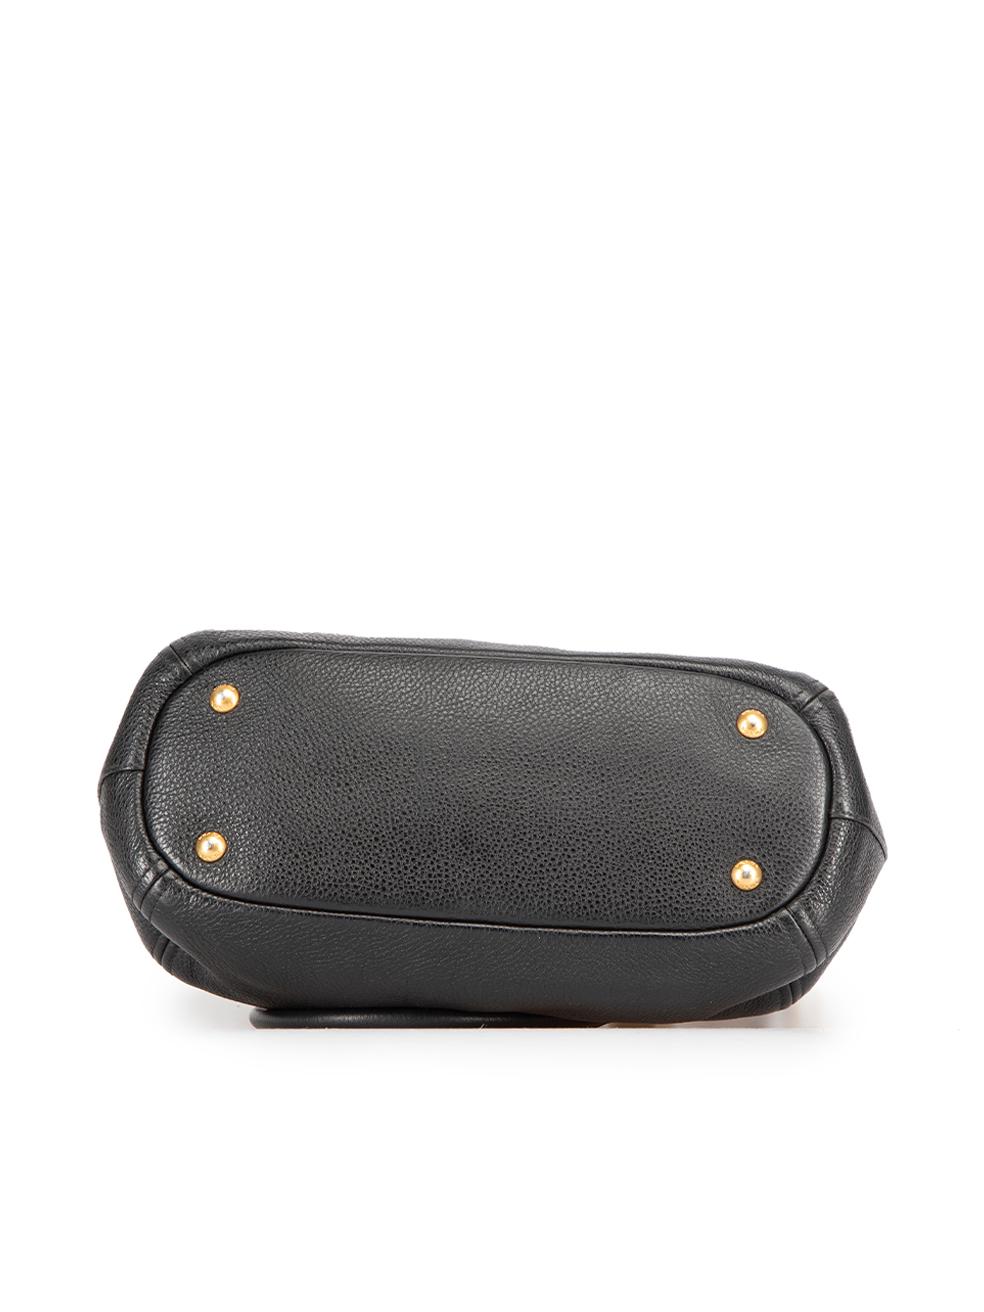 Prada Women's Black Leather Vitello Daino Convertible Handbag 1